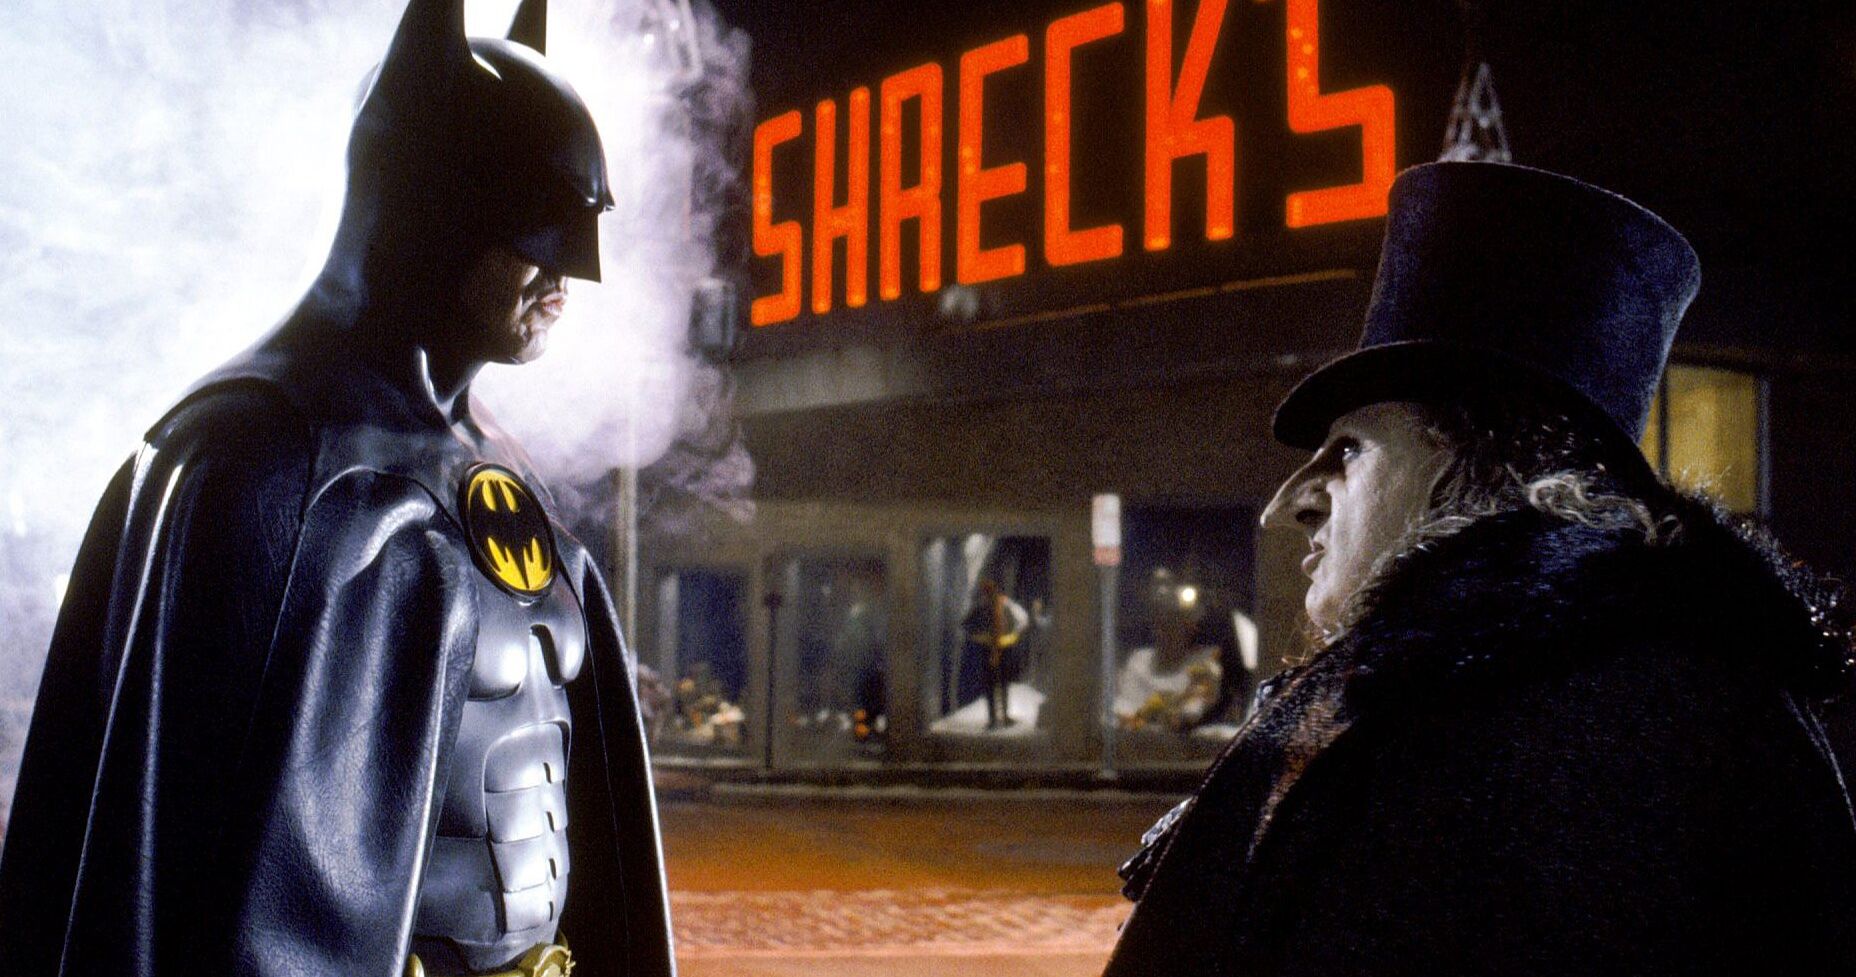 Danny DeVito Thinks Michael Keaton's Return as Batman in The Flash Movie Is Great